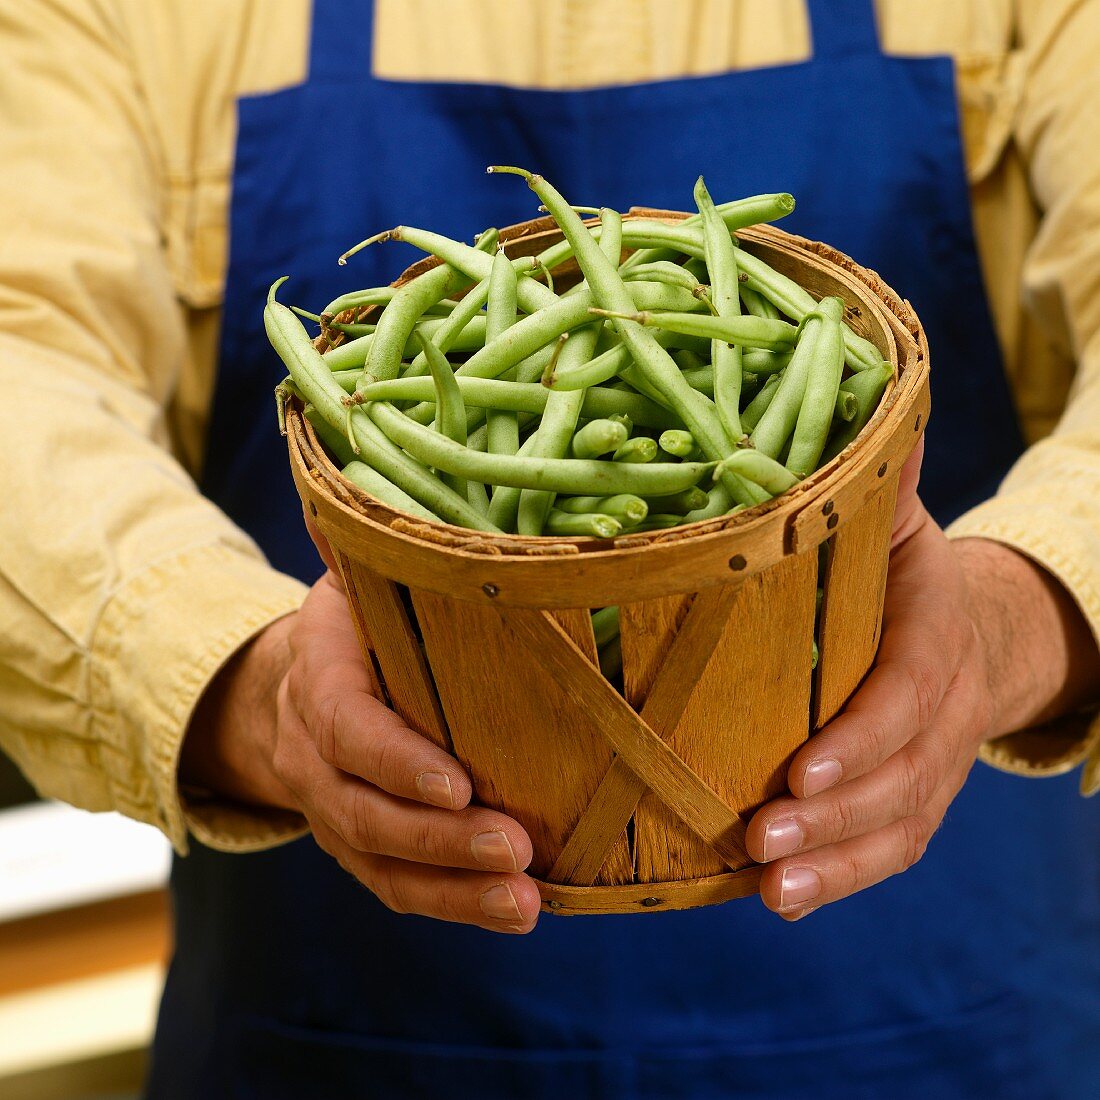 A man holding a wooden basket of green beans